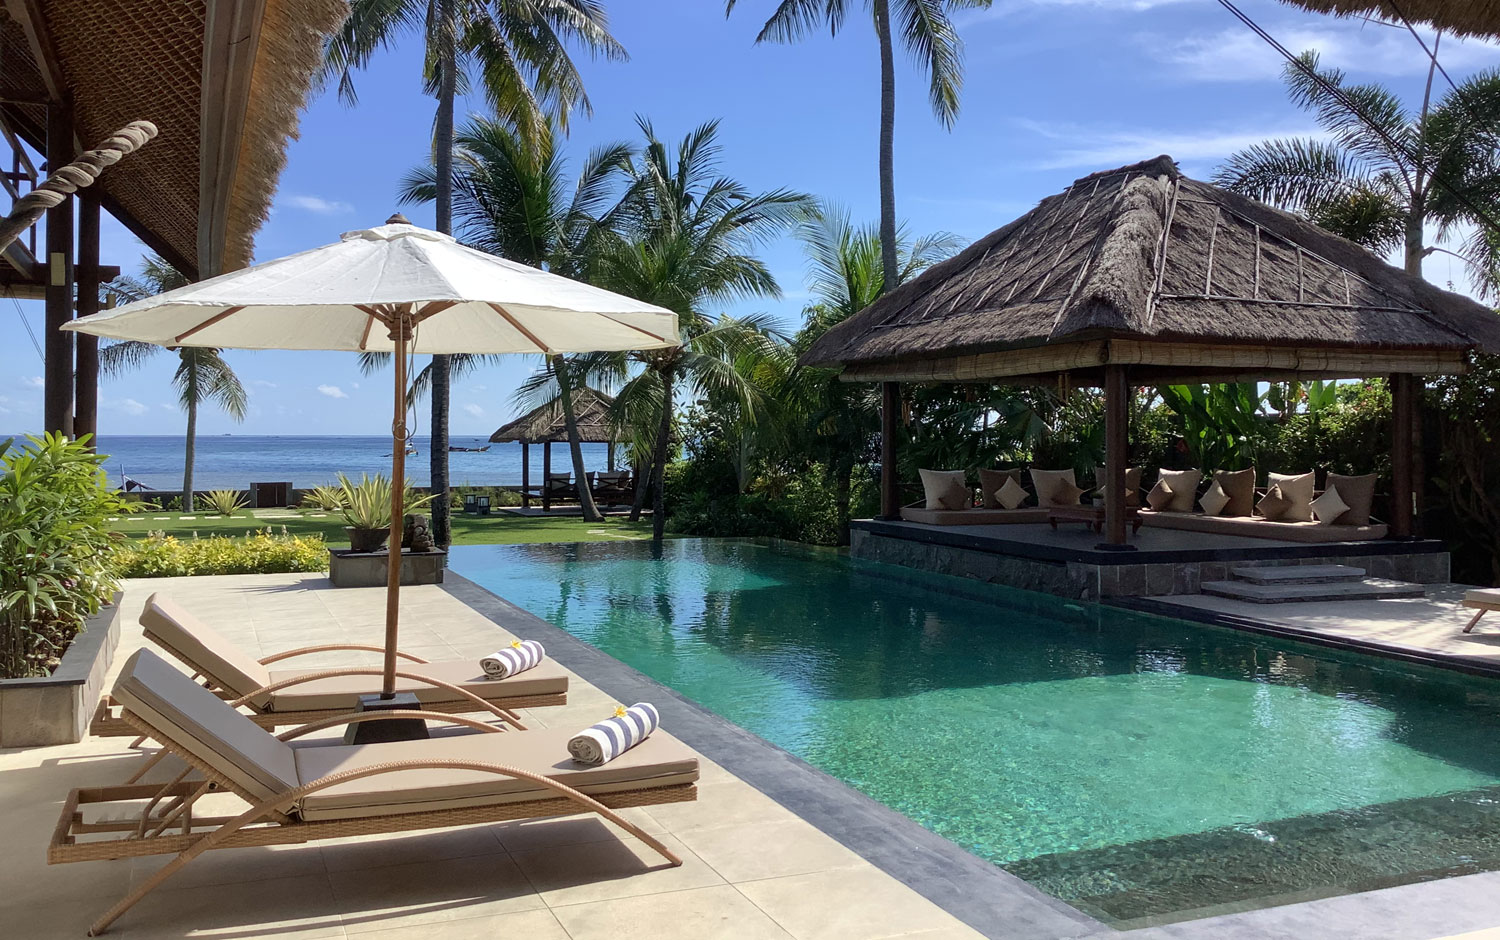 North Bali Seaside Villa